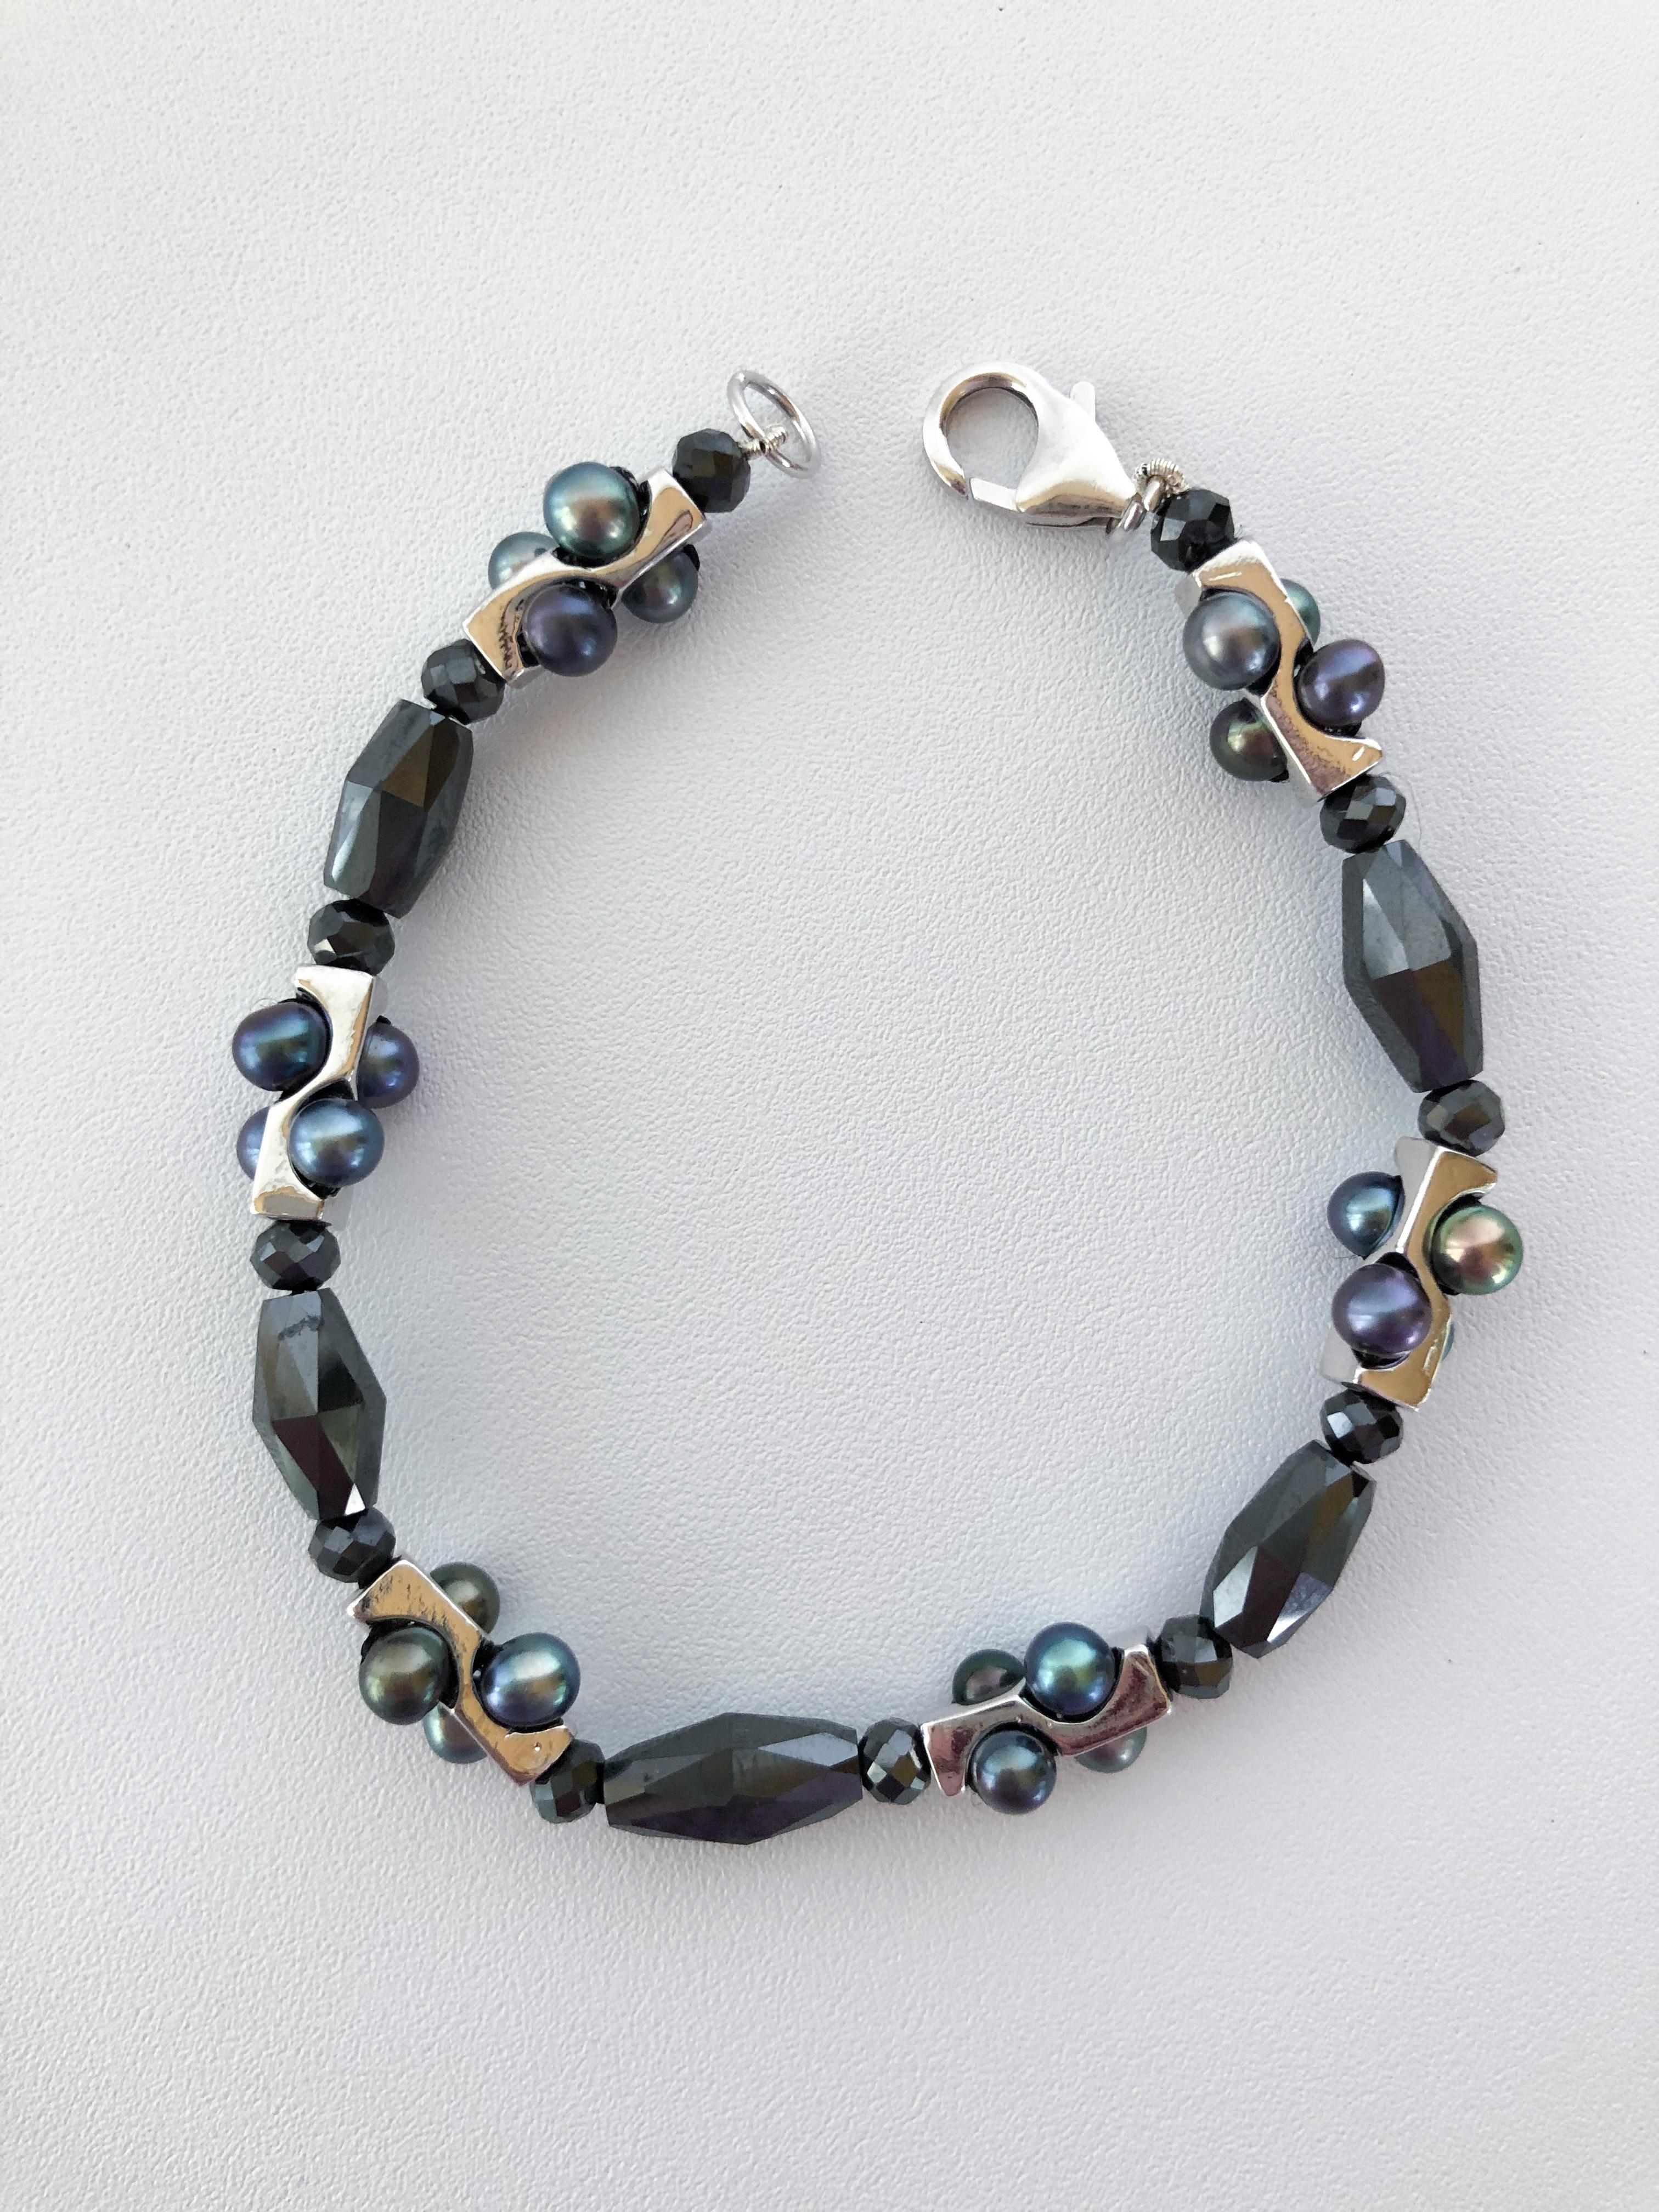 Marina J. Unisex Infinity Bracelet w Black Pearls, Black Spinel & 14K White Gold For Sale 1